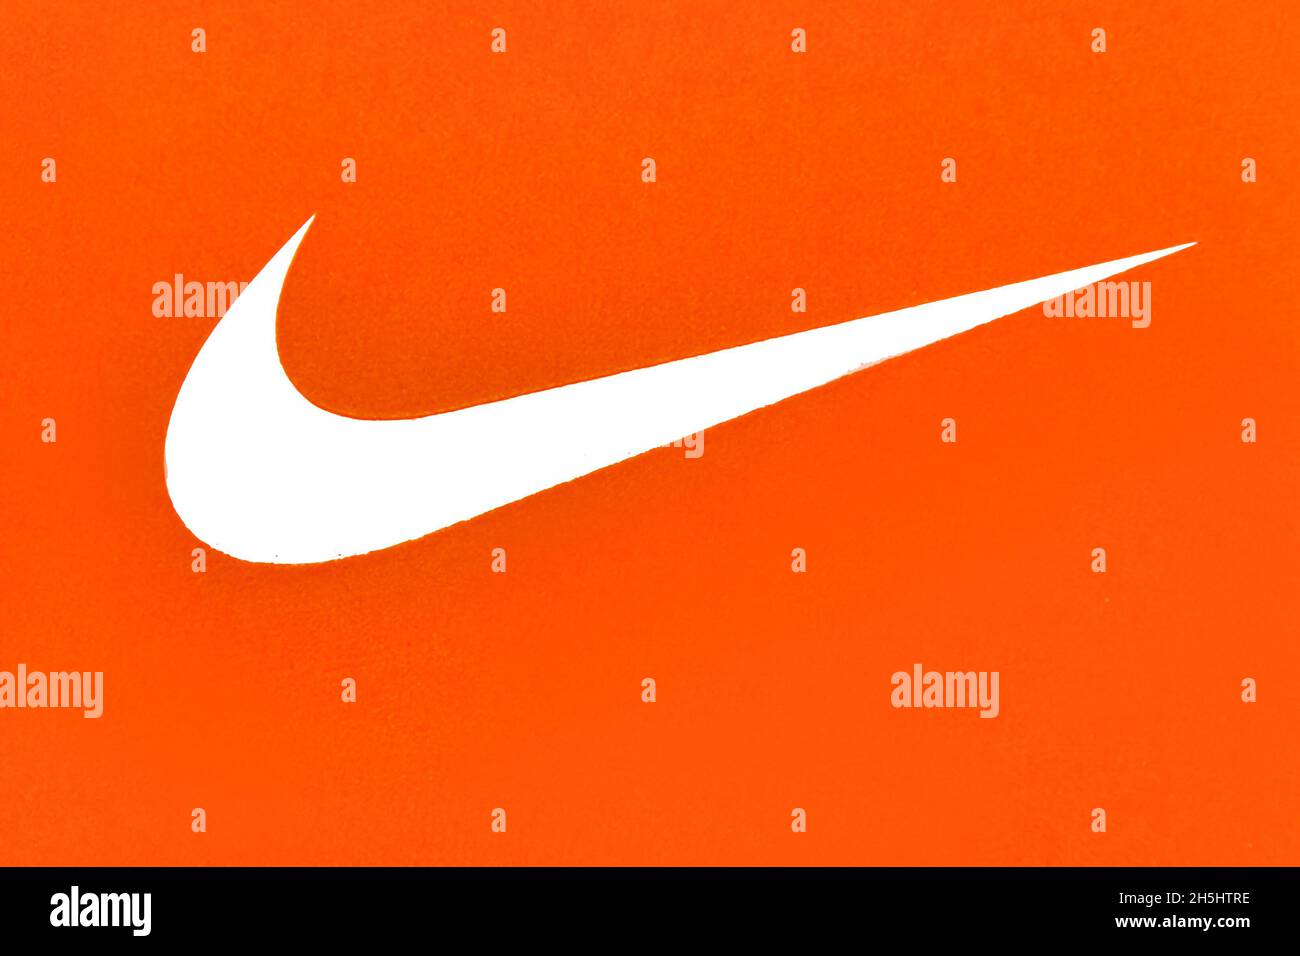 Nike logo shoe box hi-res stock photography and images - Alamy